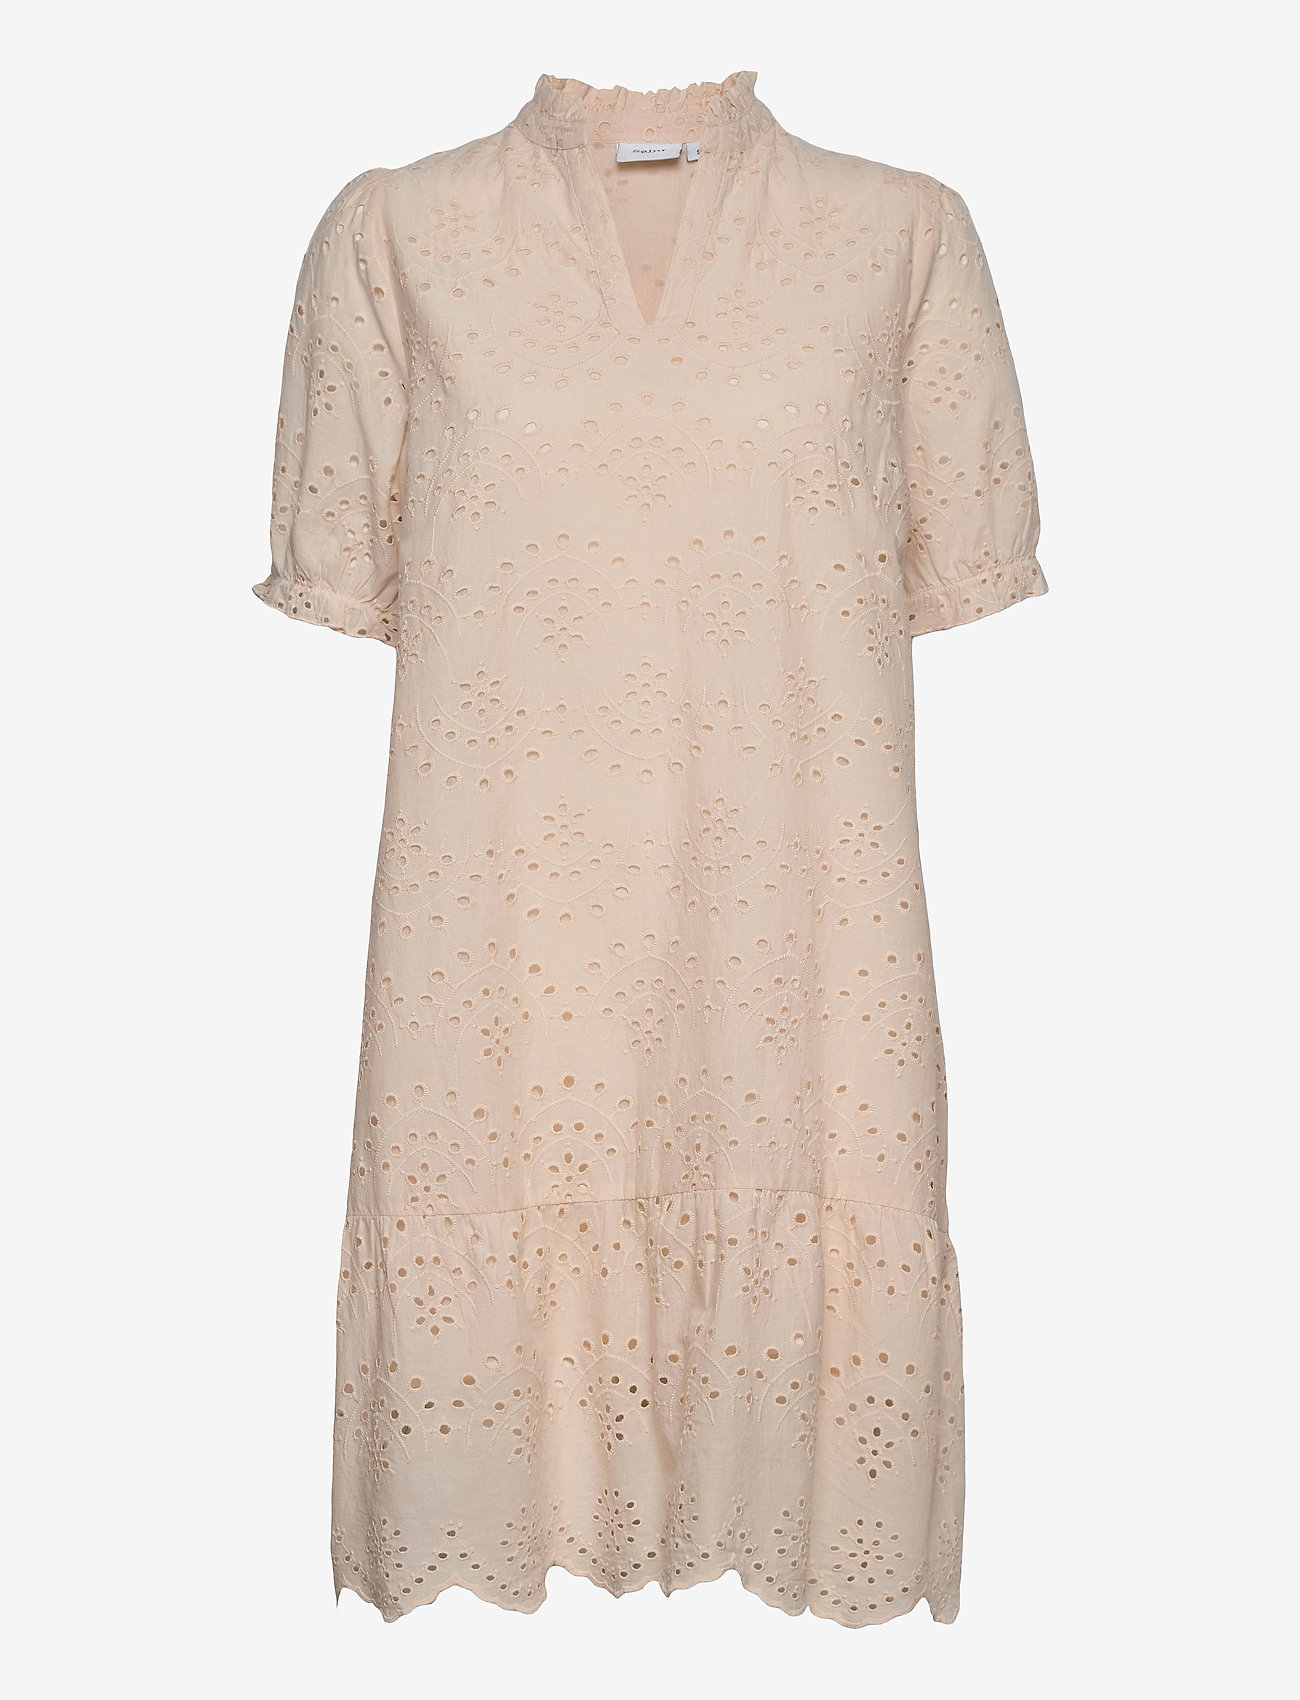 Saint Tropez - GeleksaSZ Dress - summer dresses - creme - 0